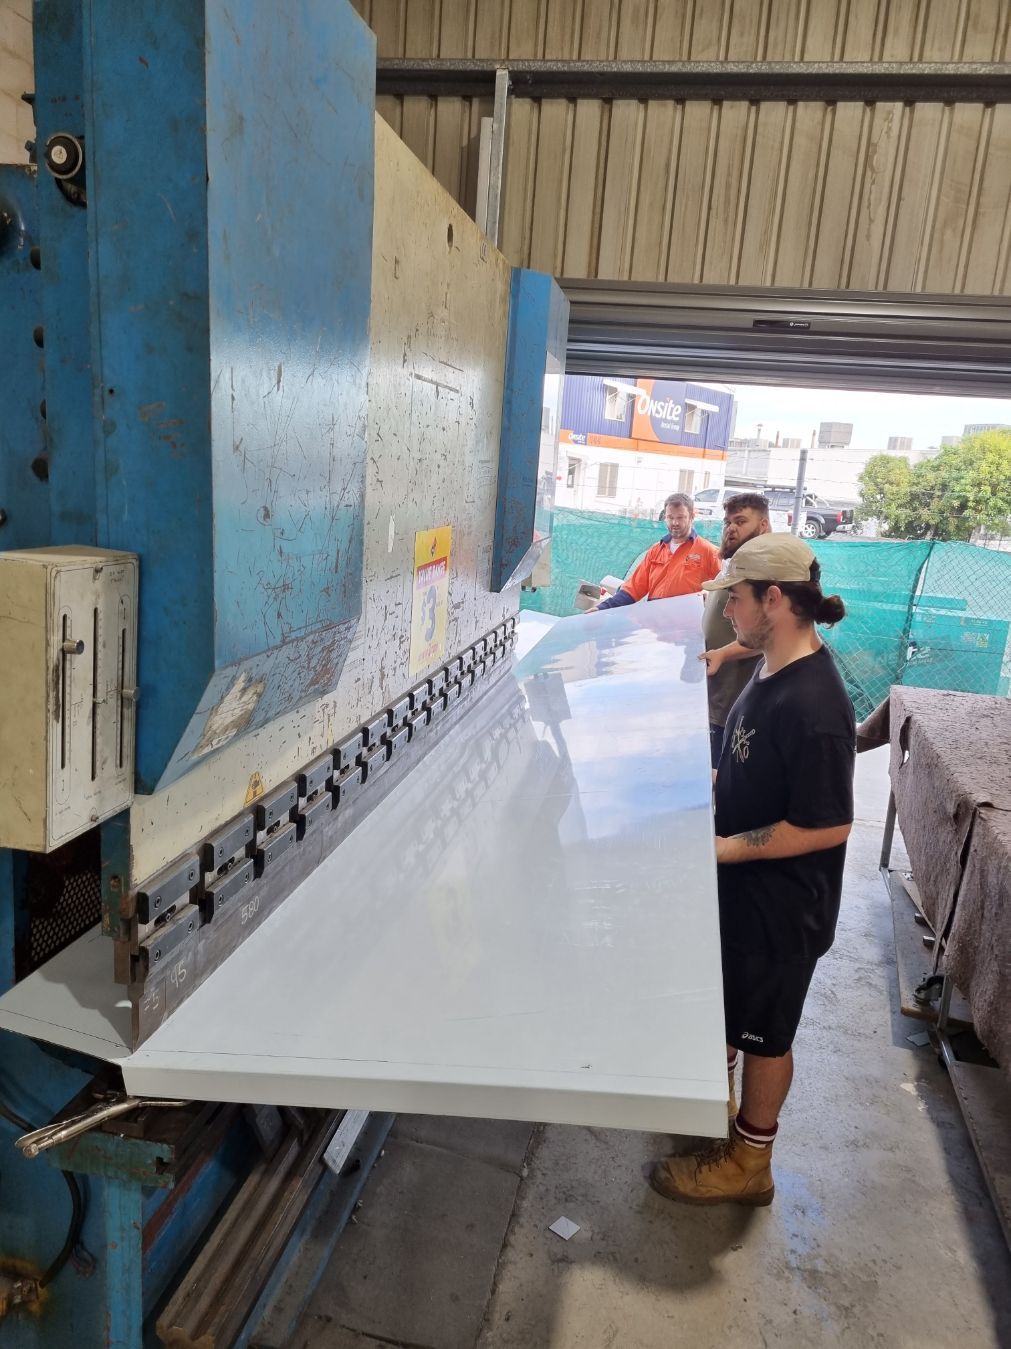 Workers Bending A Sheet Metal — Sheet Metal Fabrication in Gold Coast, QLD